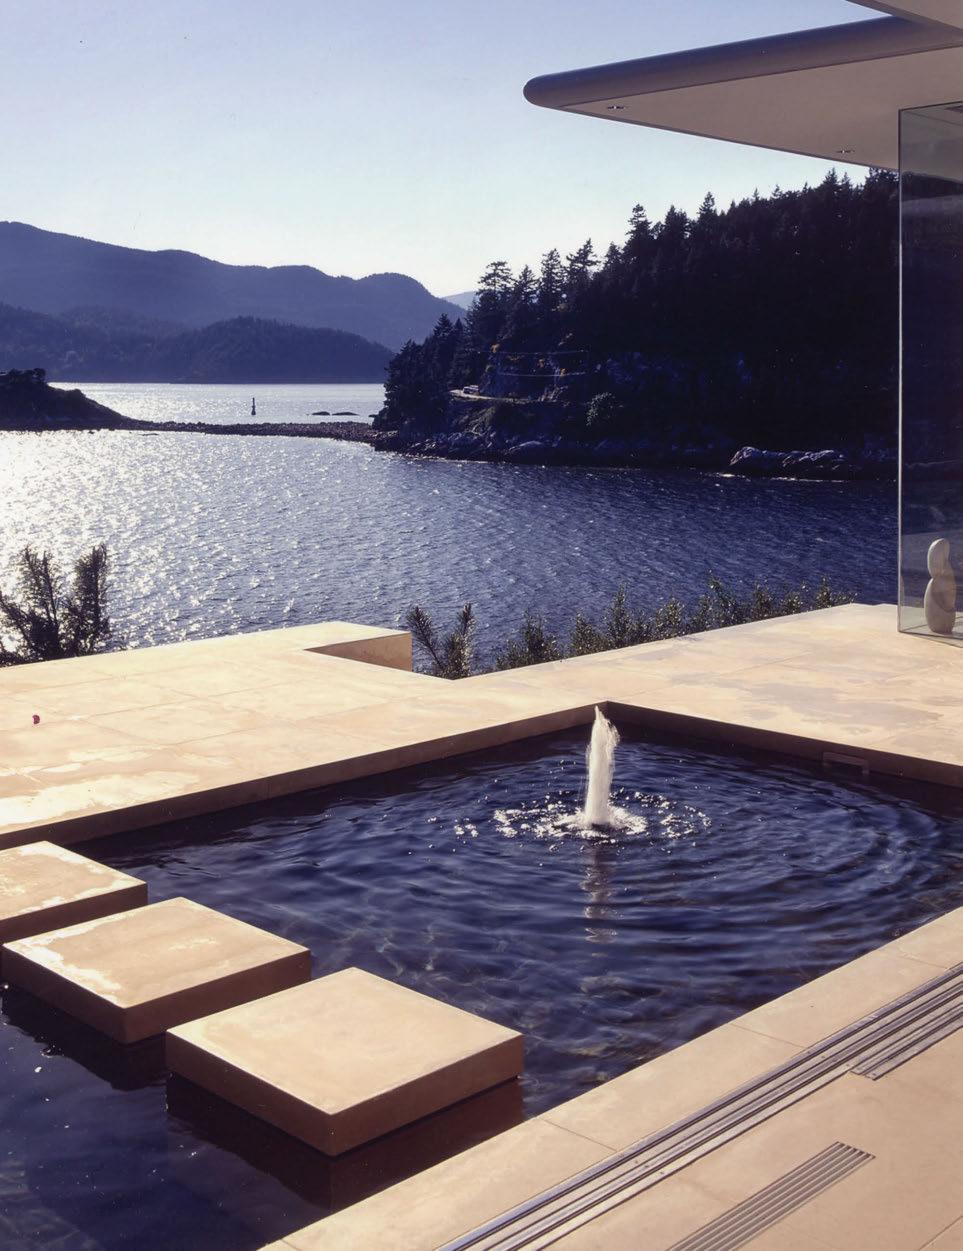 Private Villa West Vancouver, Canada [en] Construction: Private Villa Location: